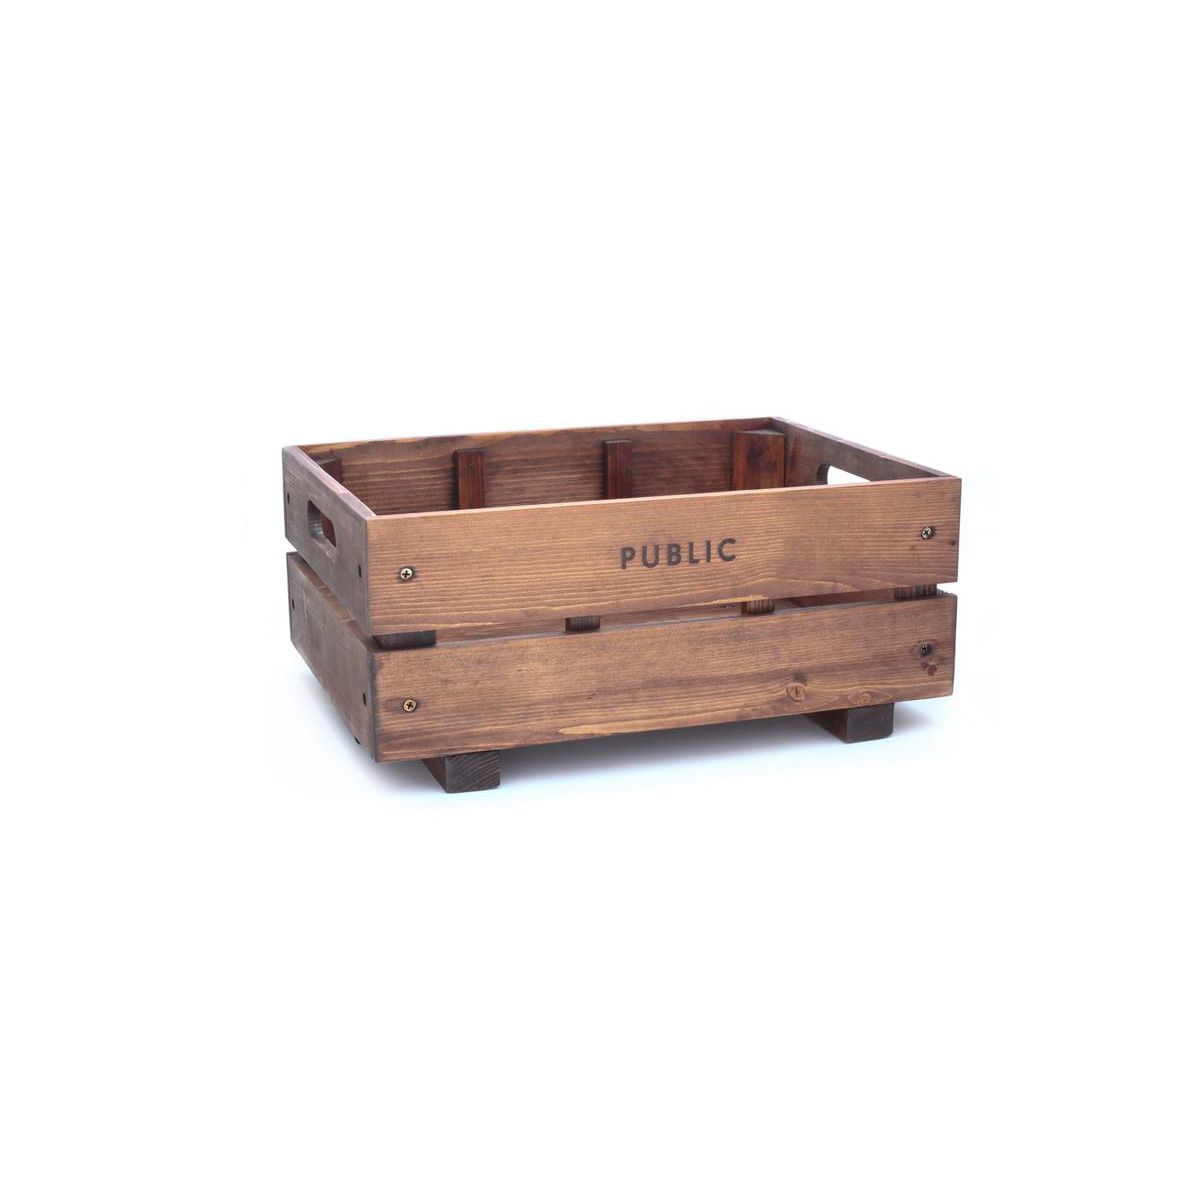 Public Wooden Crate